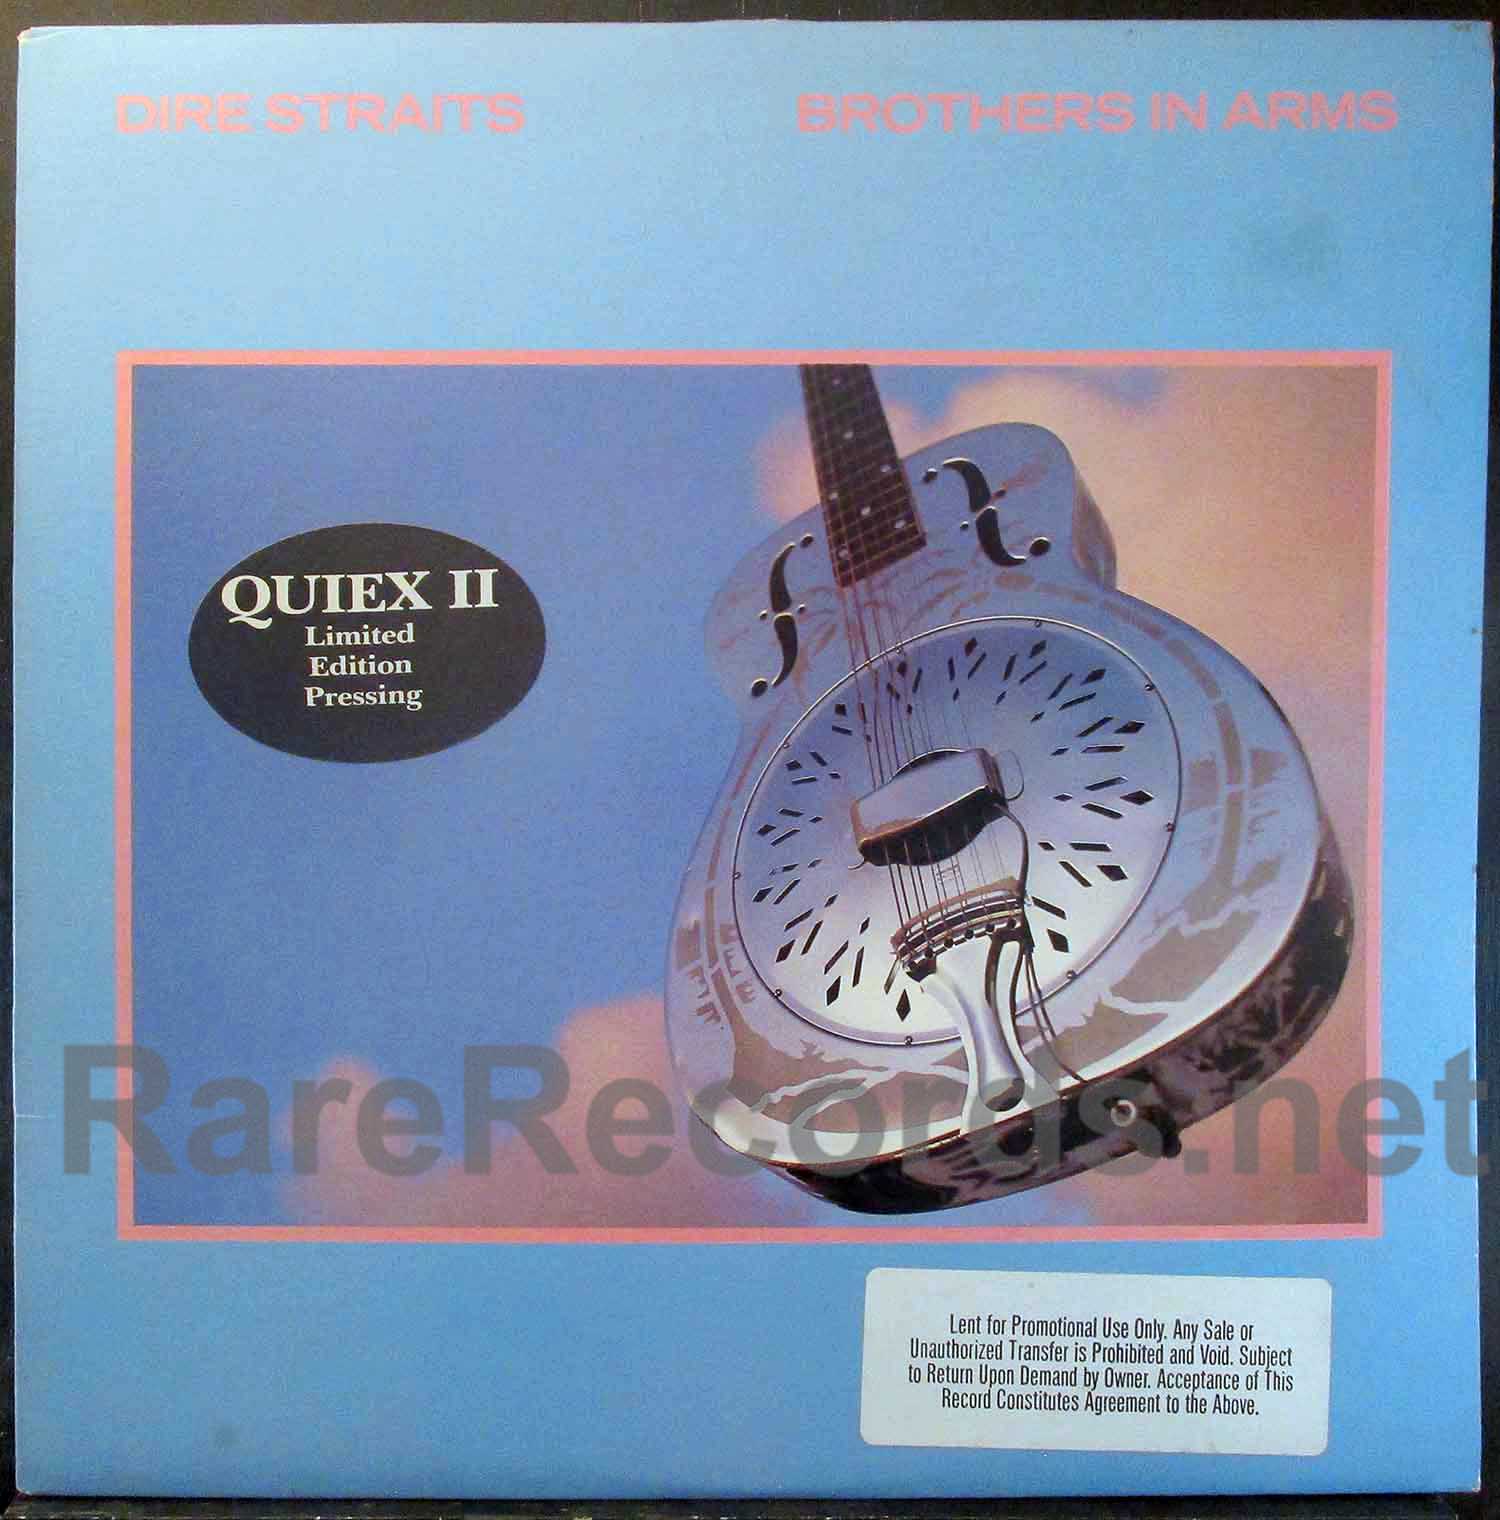 Dire Straits - Brothers in Arms Quiex II vinyl promotional U.S. LP